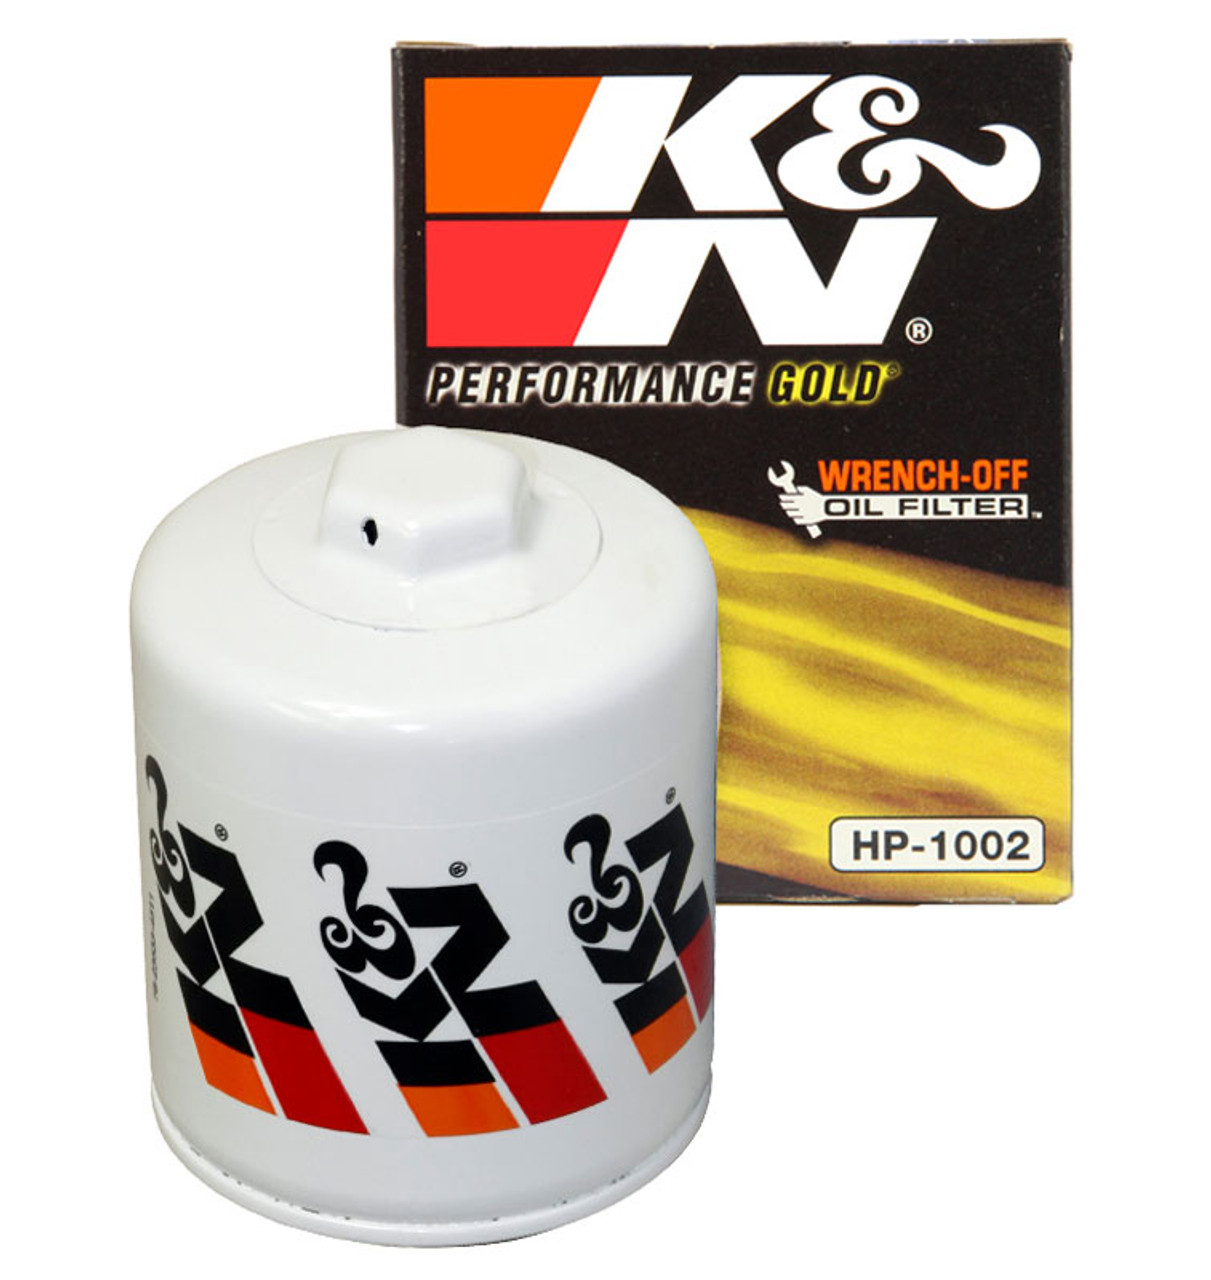 K&N Oil Filter for the  Jeep Wrangler Engine